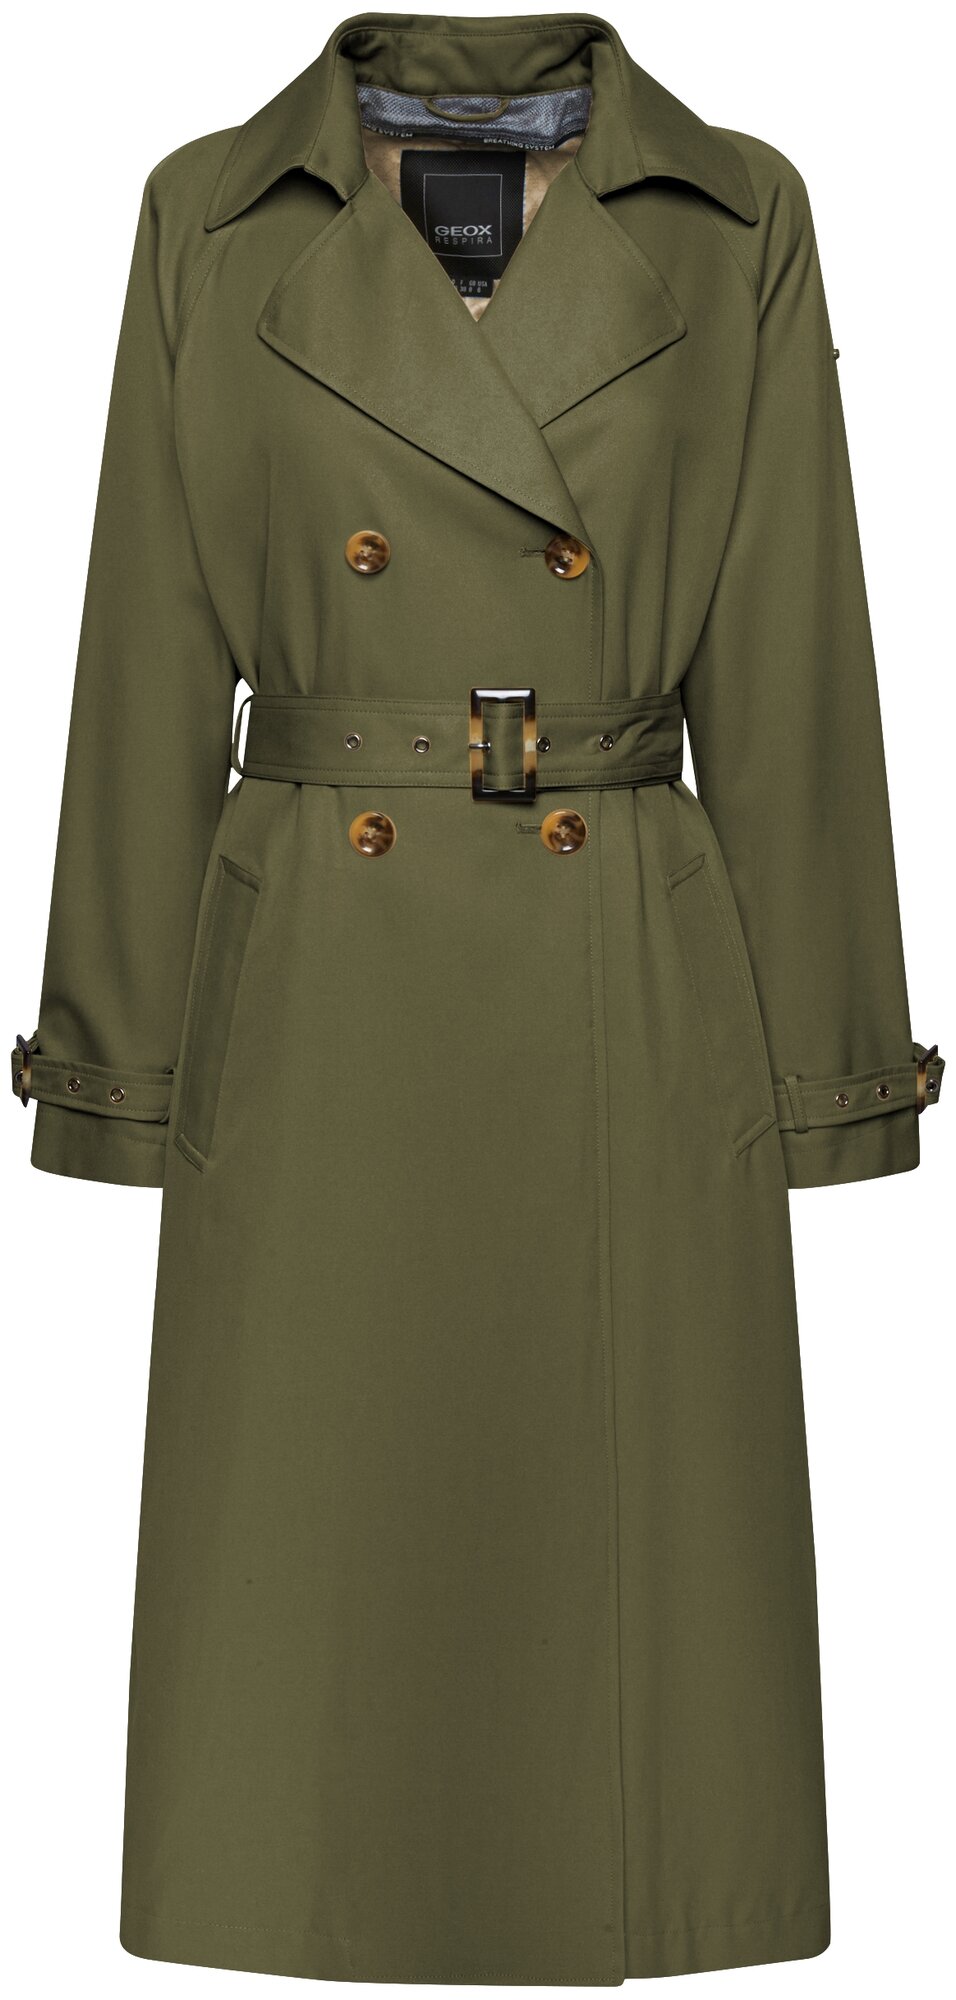 Куртка GEOX для женщин W TOPAZIO цвет бежево-коричневый 